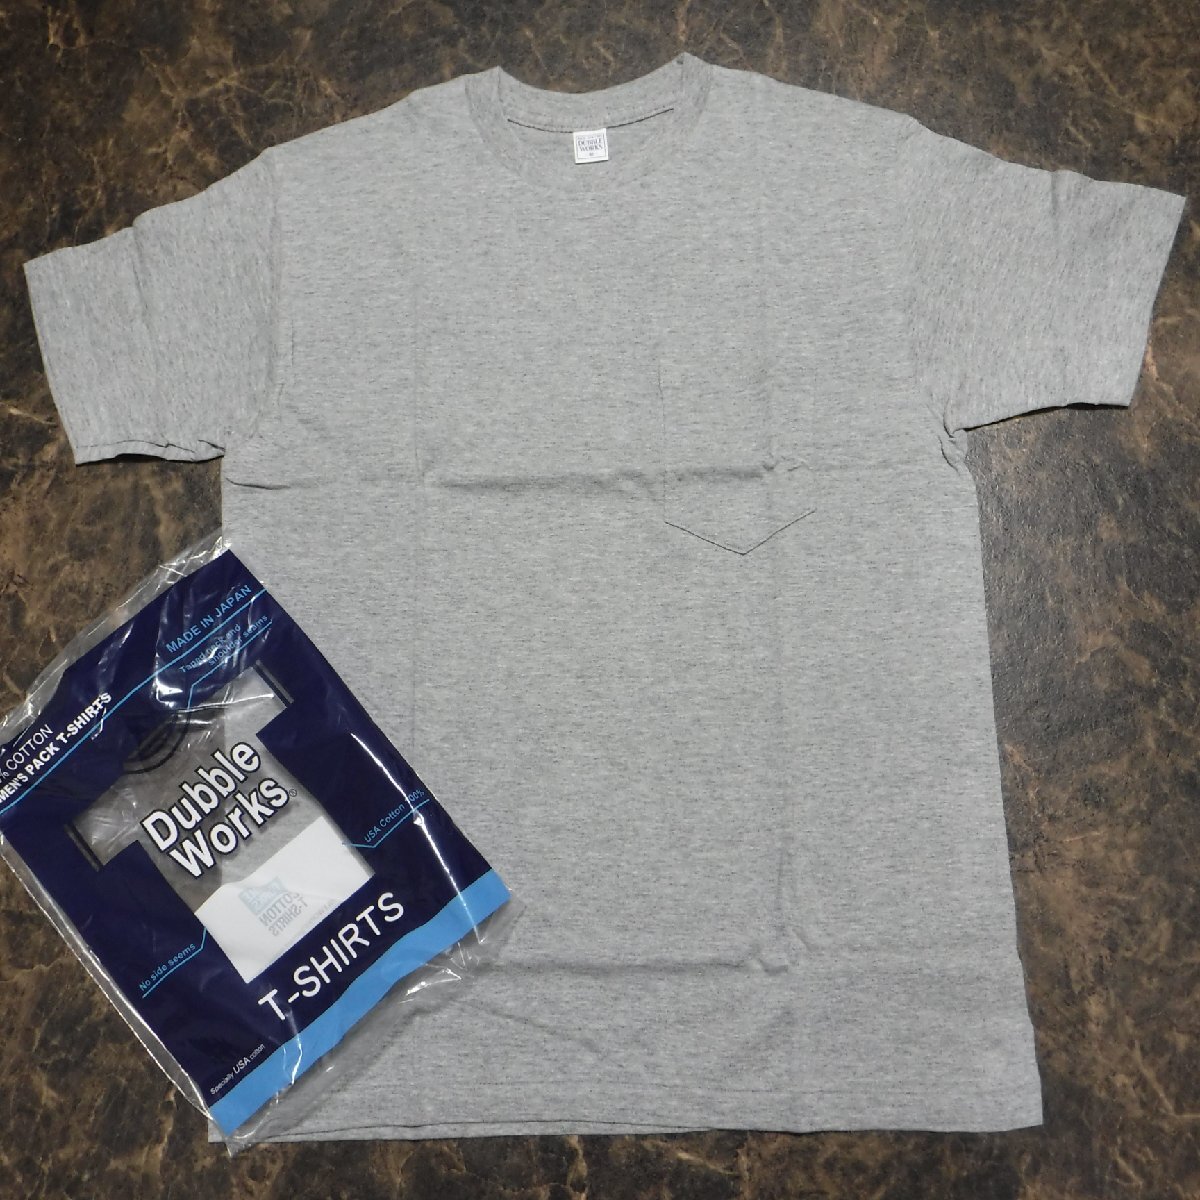 TT412 ウエアハウス ダブルワークス 新品 杢グレー 胸ポケット付き 半袖Tシャツ L(40-42) 日本製 丸胴 無地 USAコットン DUBBLEWORKS_画像1